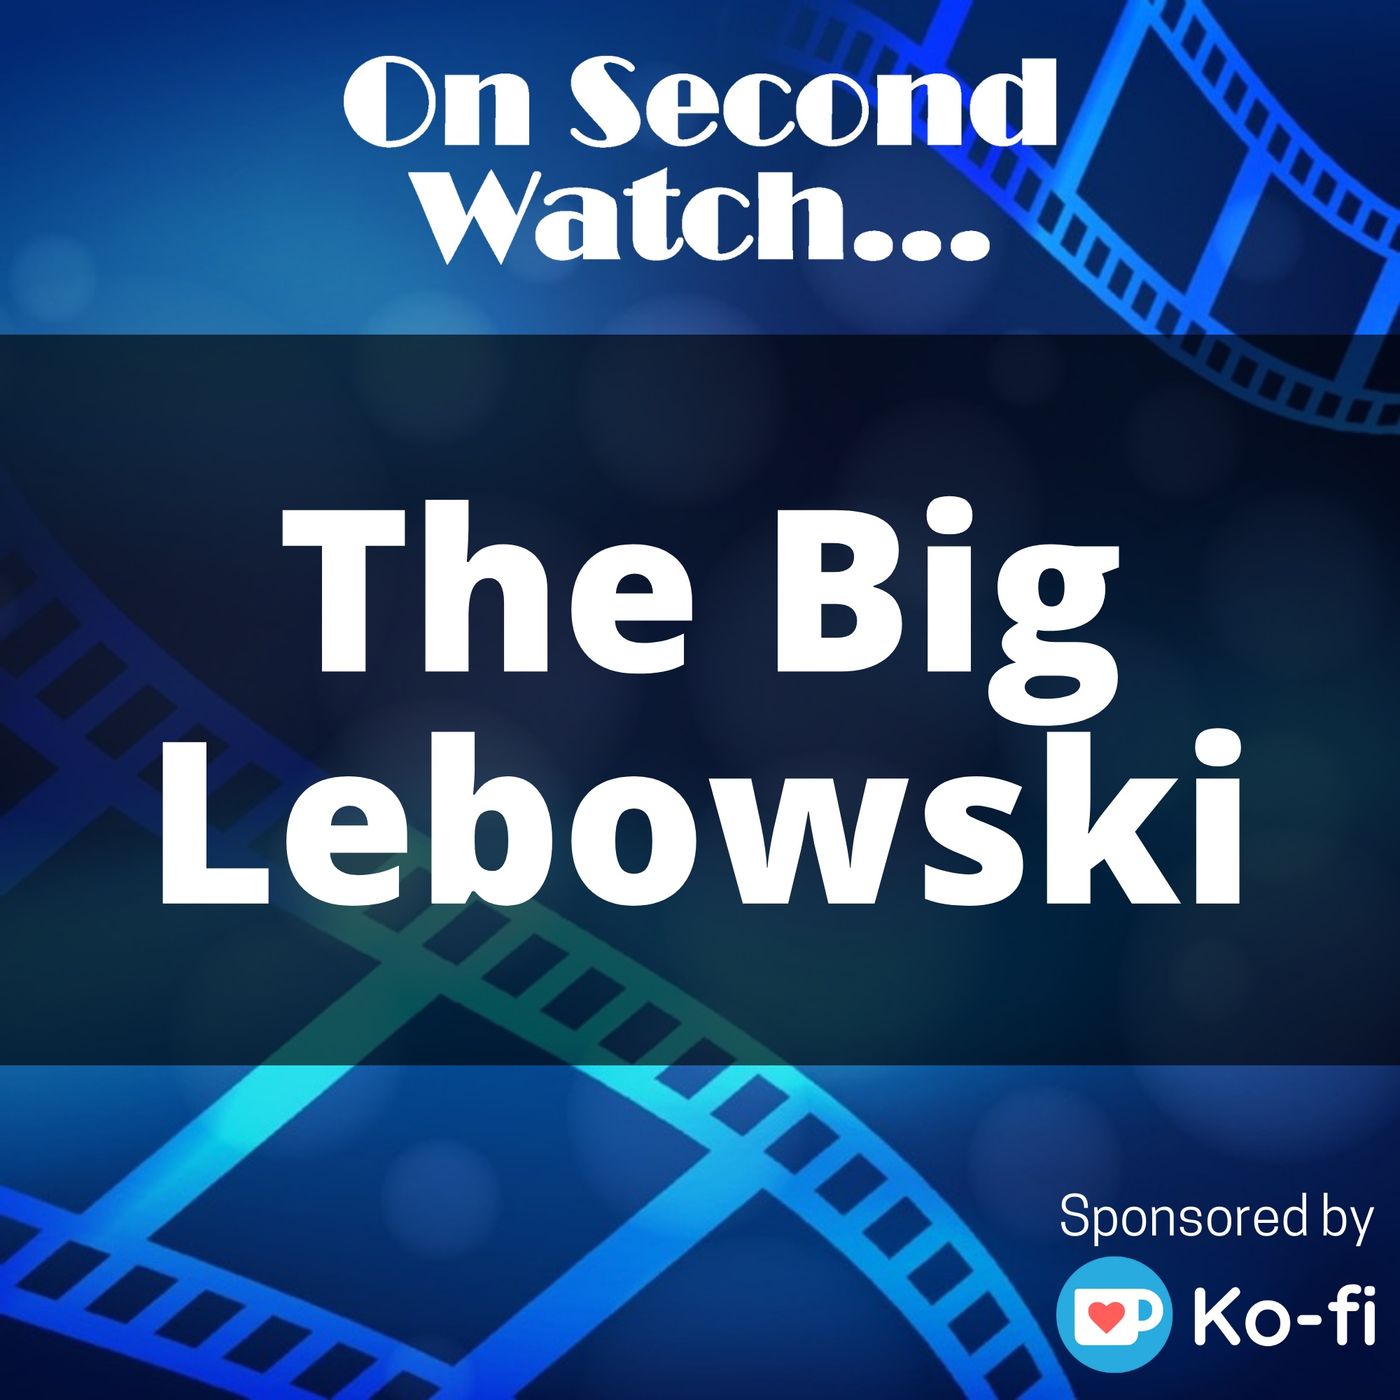 The Big Lebowski (1998) - 